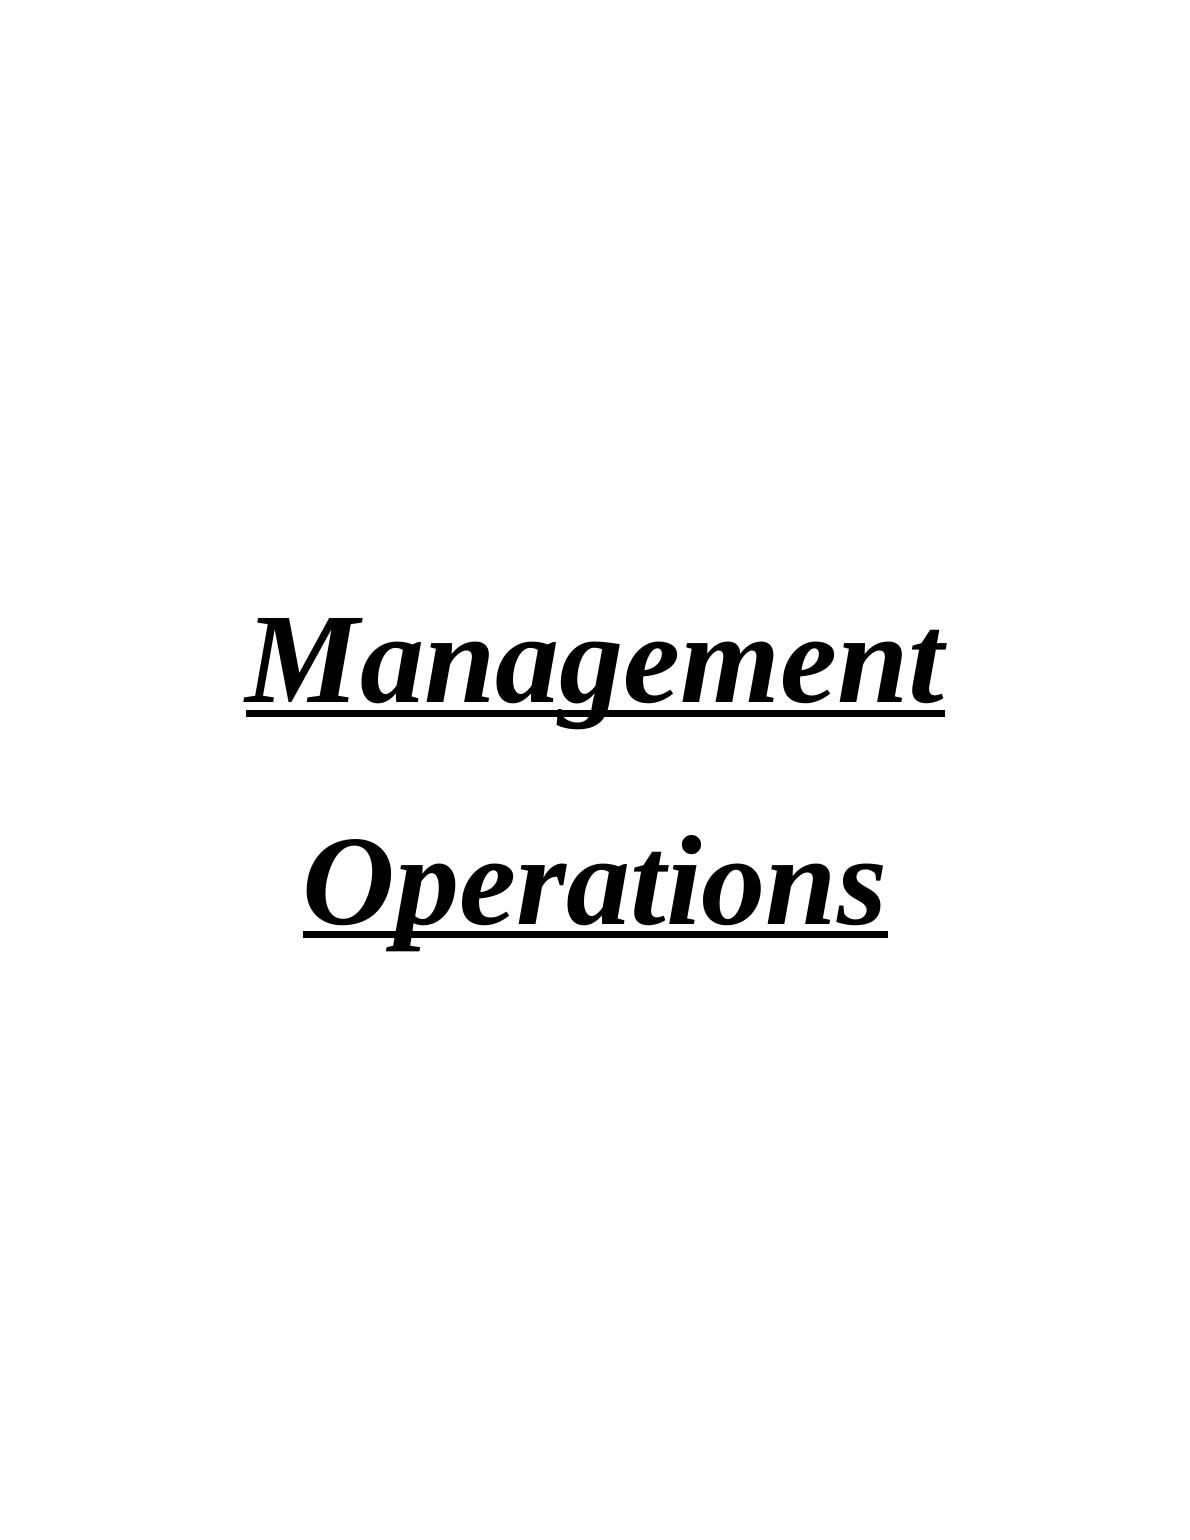 Management Operations - Greggs_1